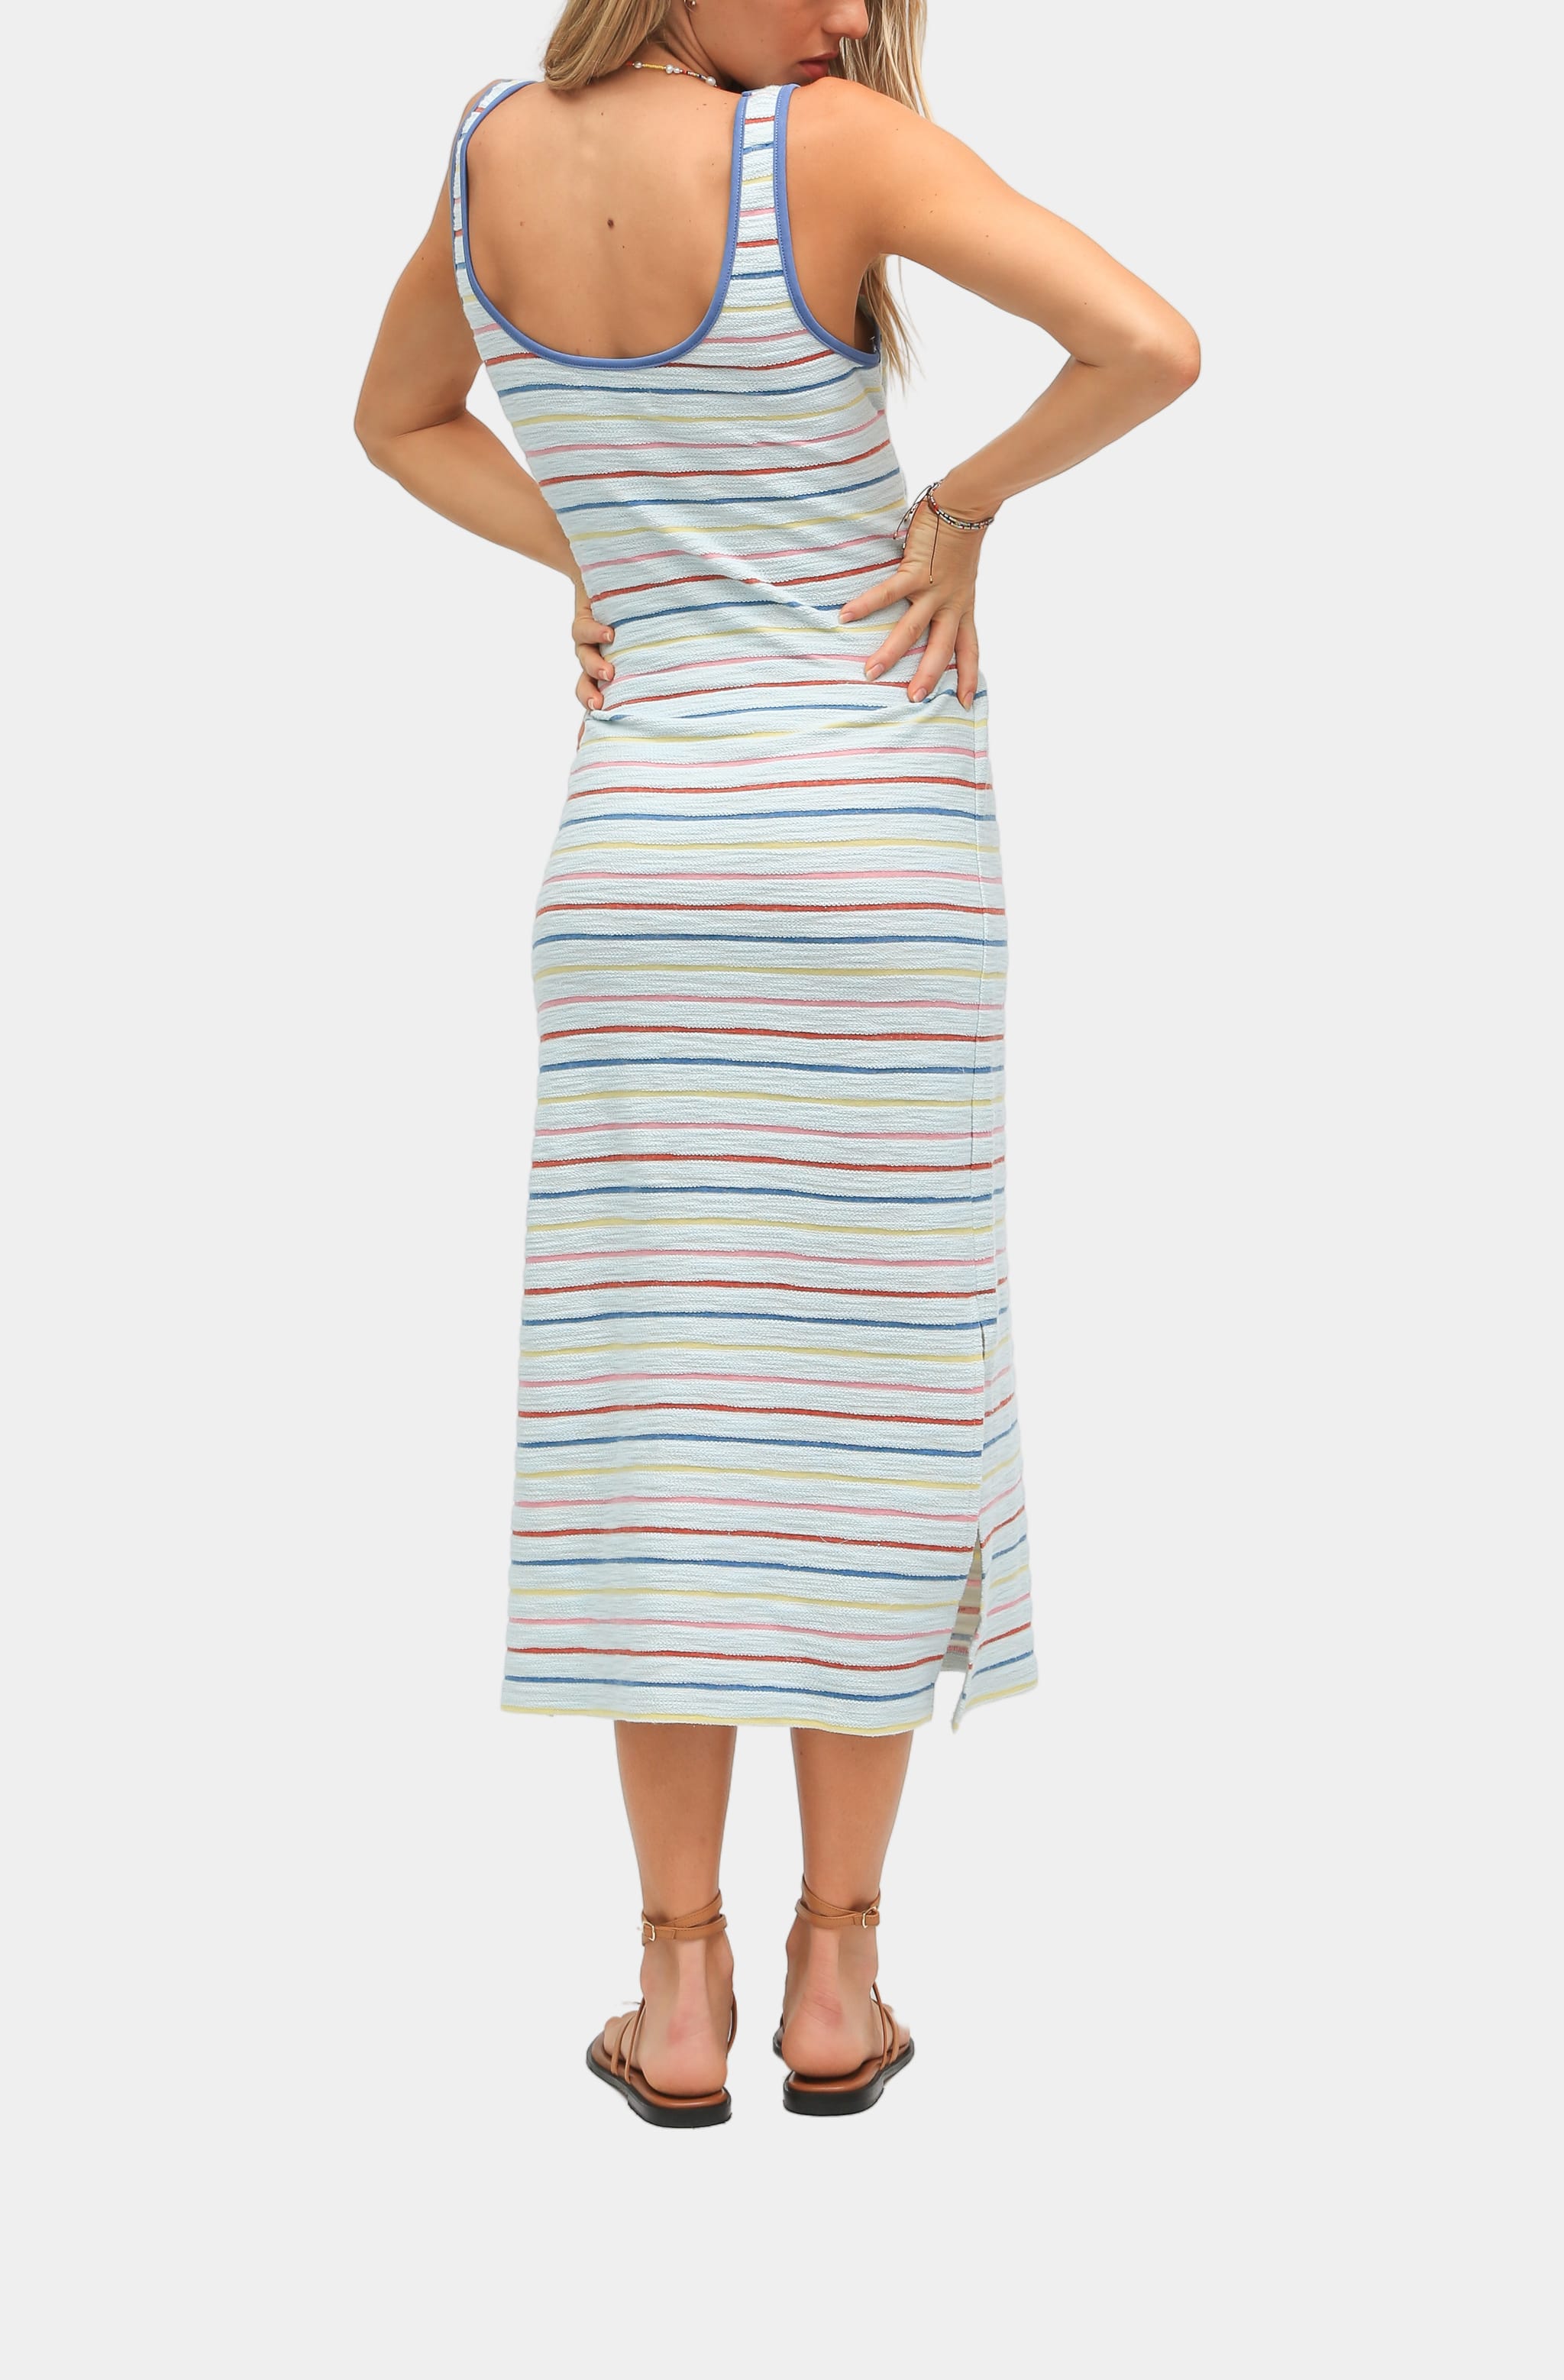 Camron Dress in Pacific Stripe